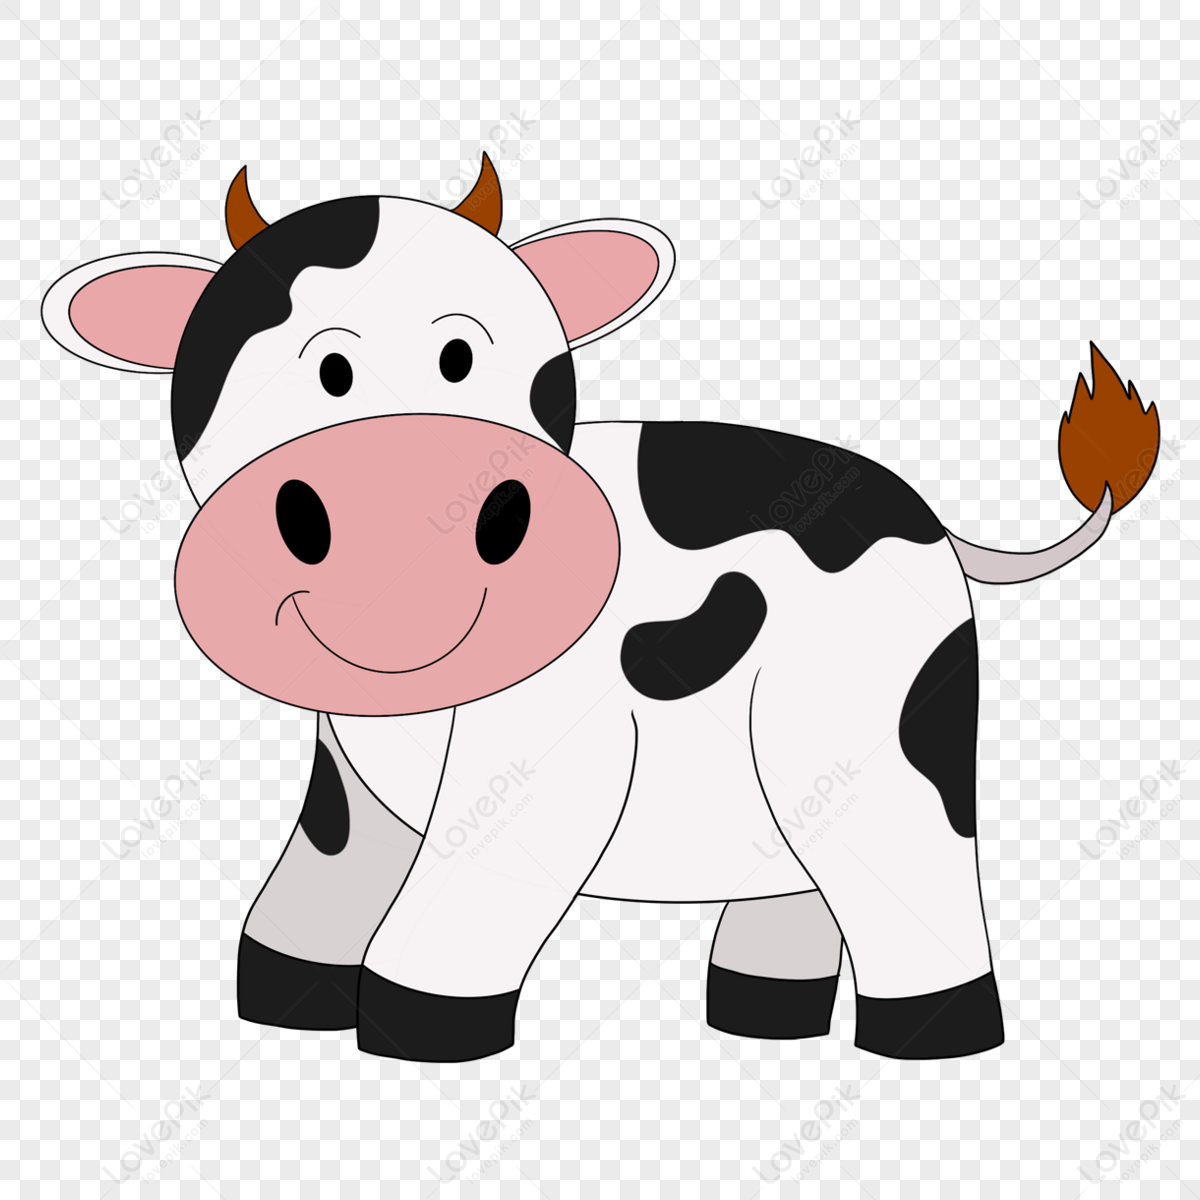 Kawaii cow love cartoon motif Royalty Free Vector Image